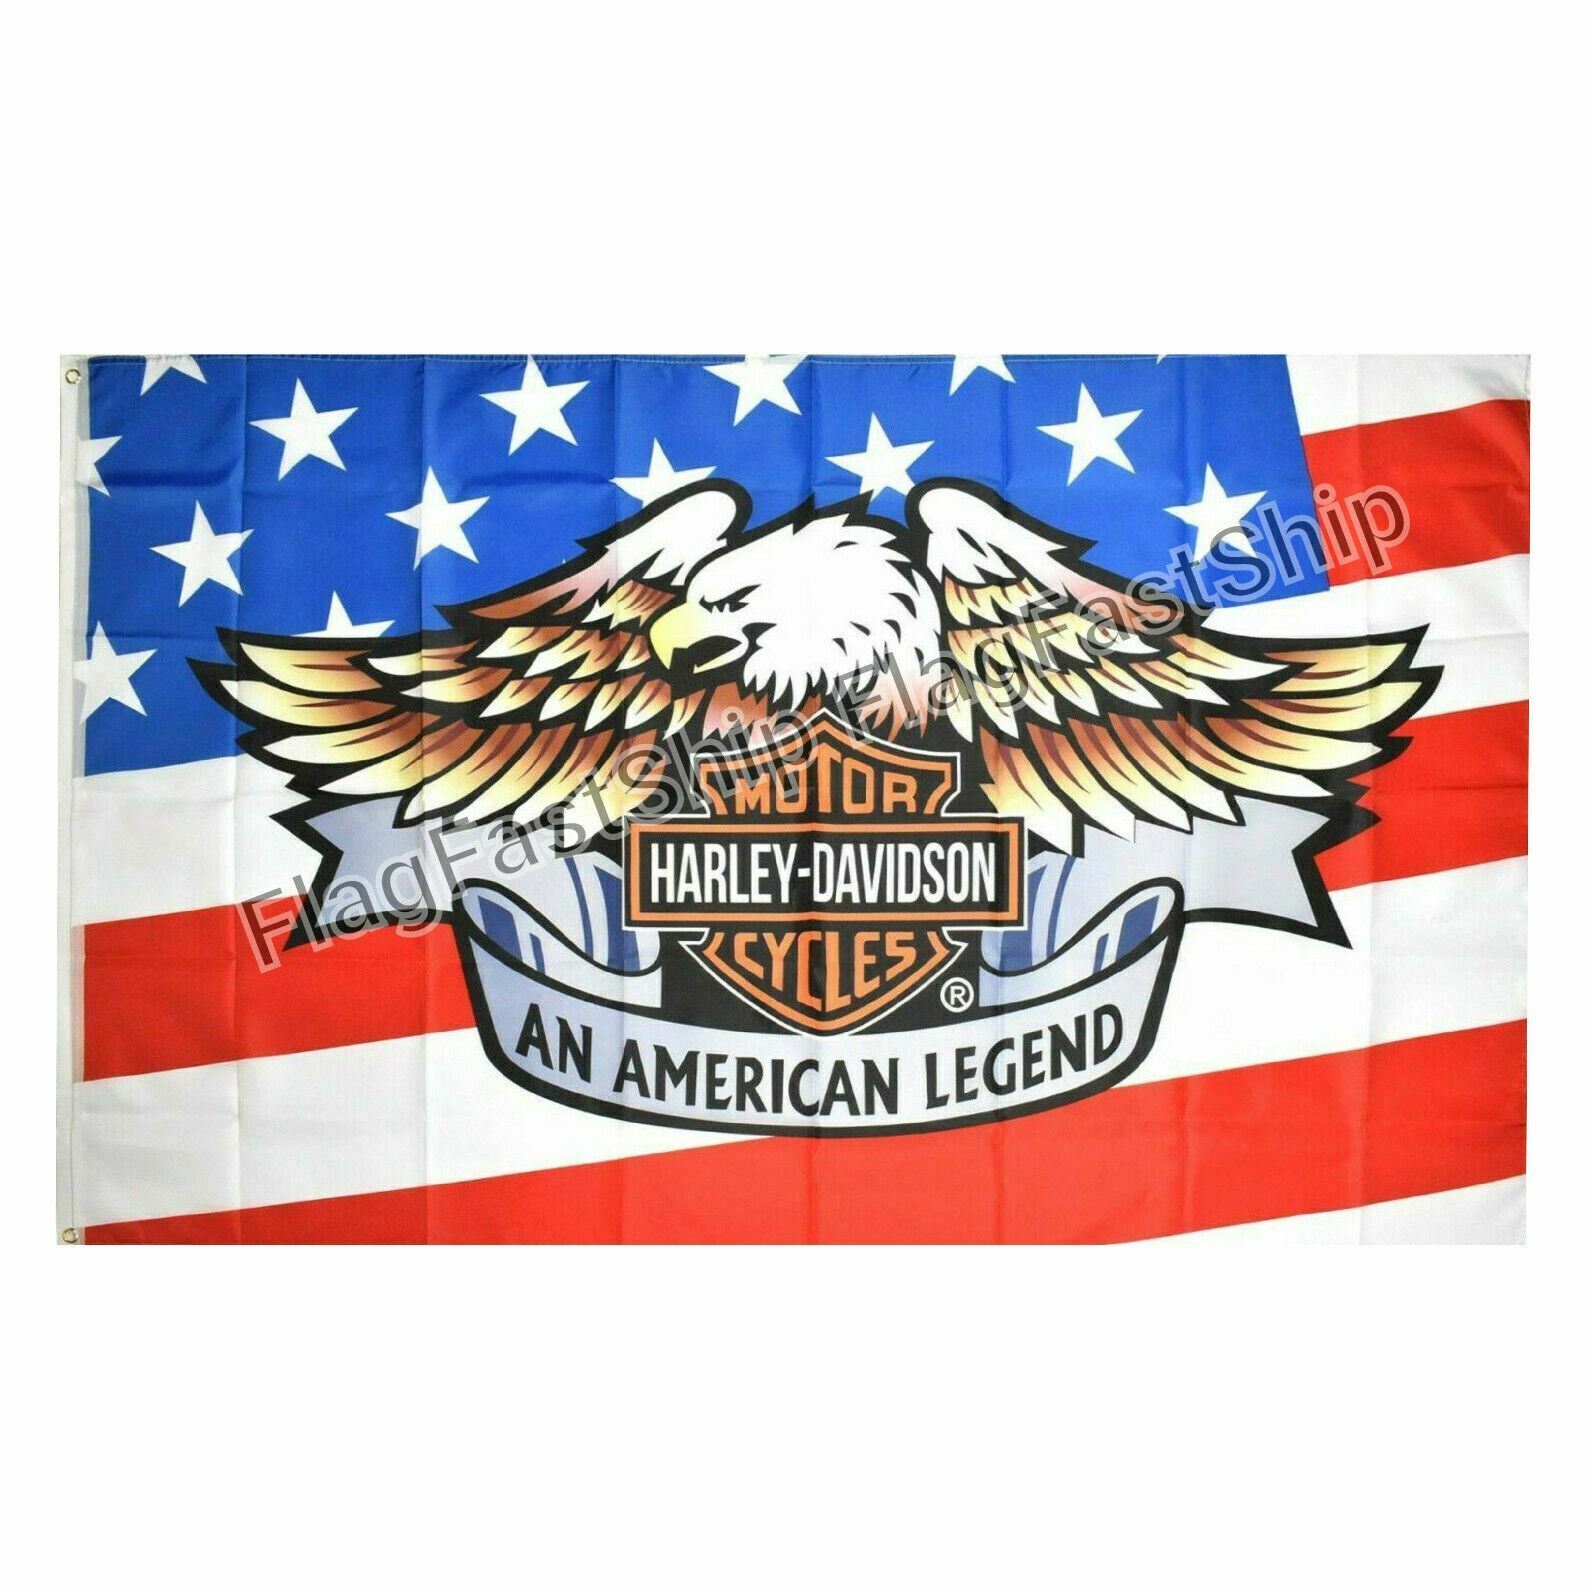 Harley Davidson 3x5 Flag Banner Usa Flag Logo With Grommets Us Seller Fast Ship